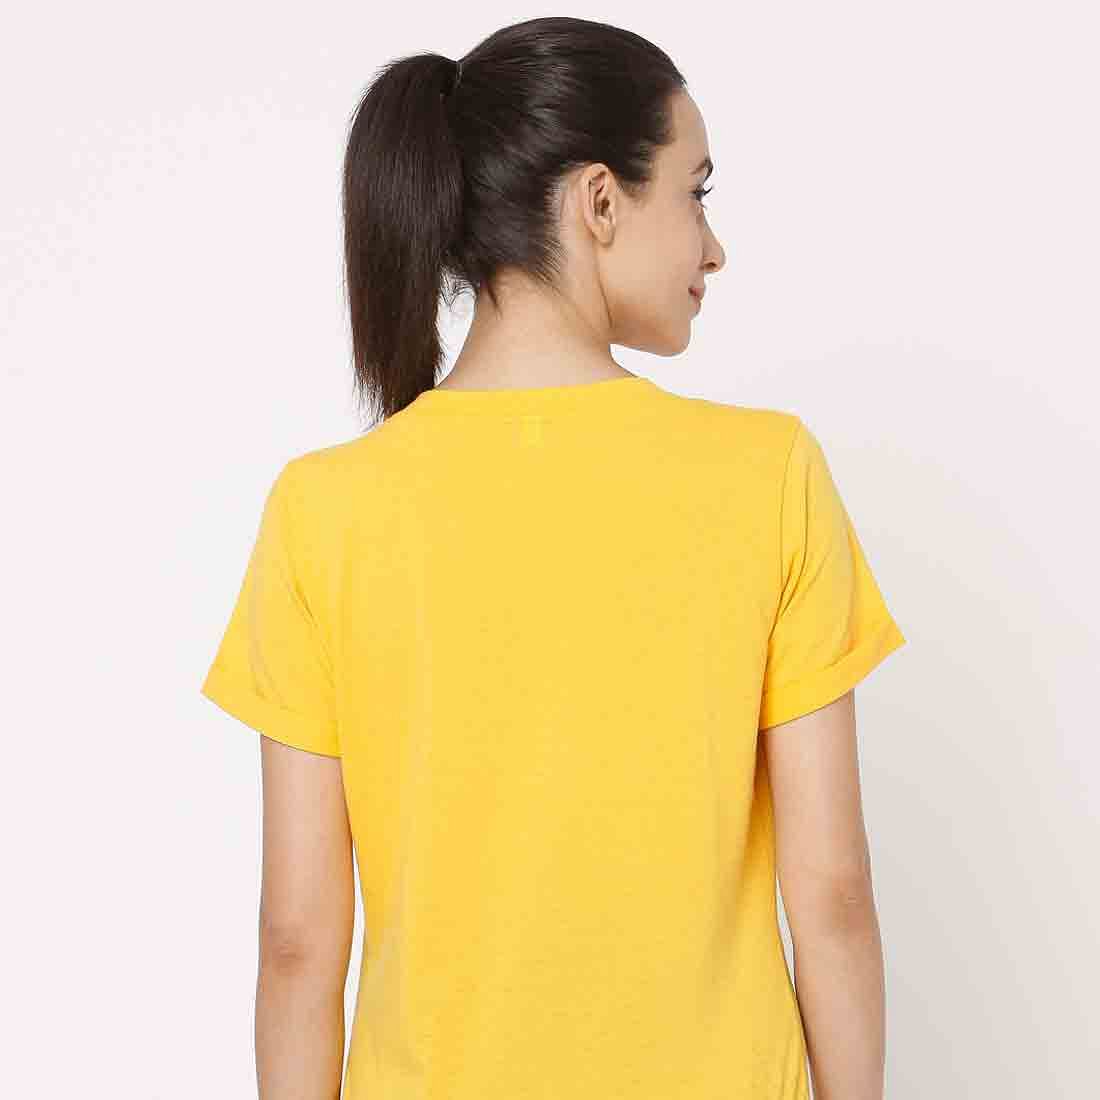 Cute T Shirts For Women Pune City Tees - Pretty Puneri Nutcase